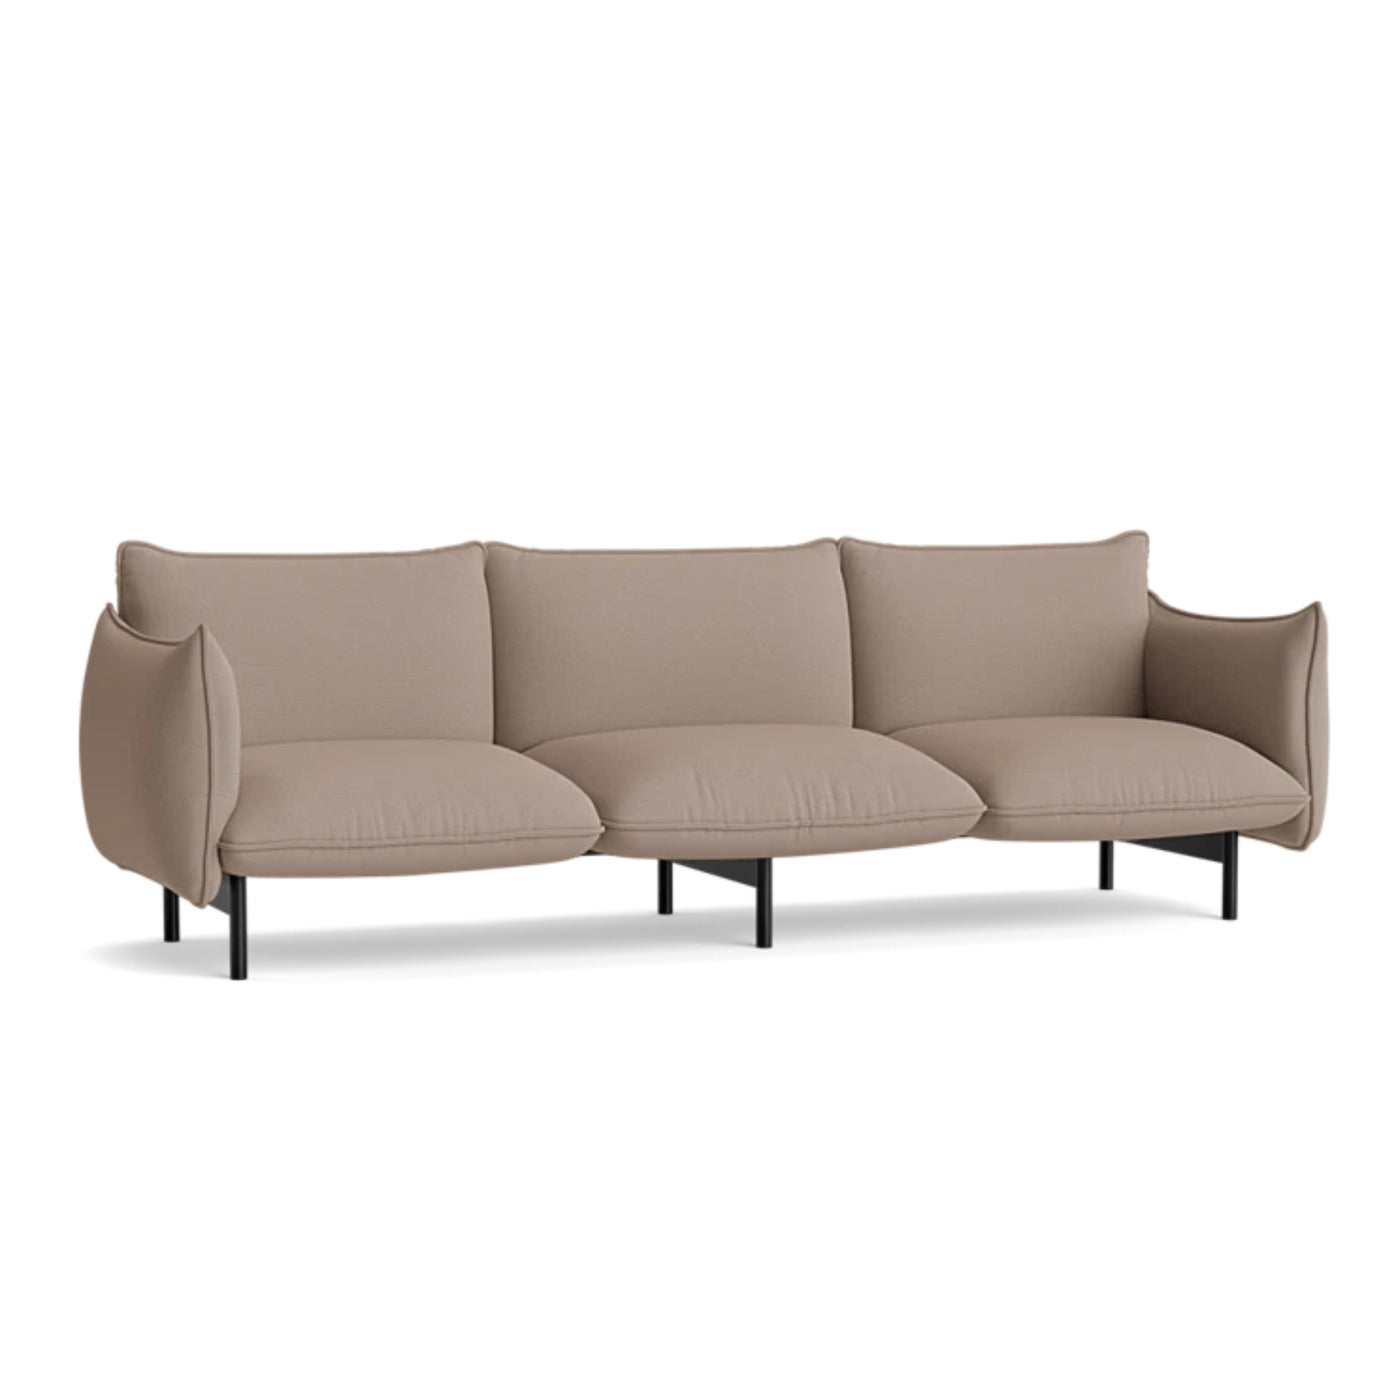 Normann Copenhagen Ark 3 Seater Modular Sofa at someday designs. #colour_steelcut-trio-426